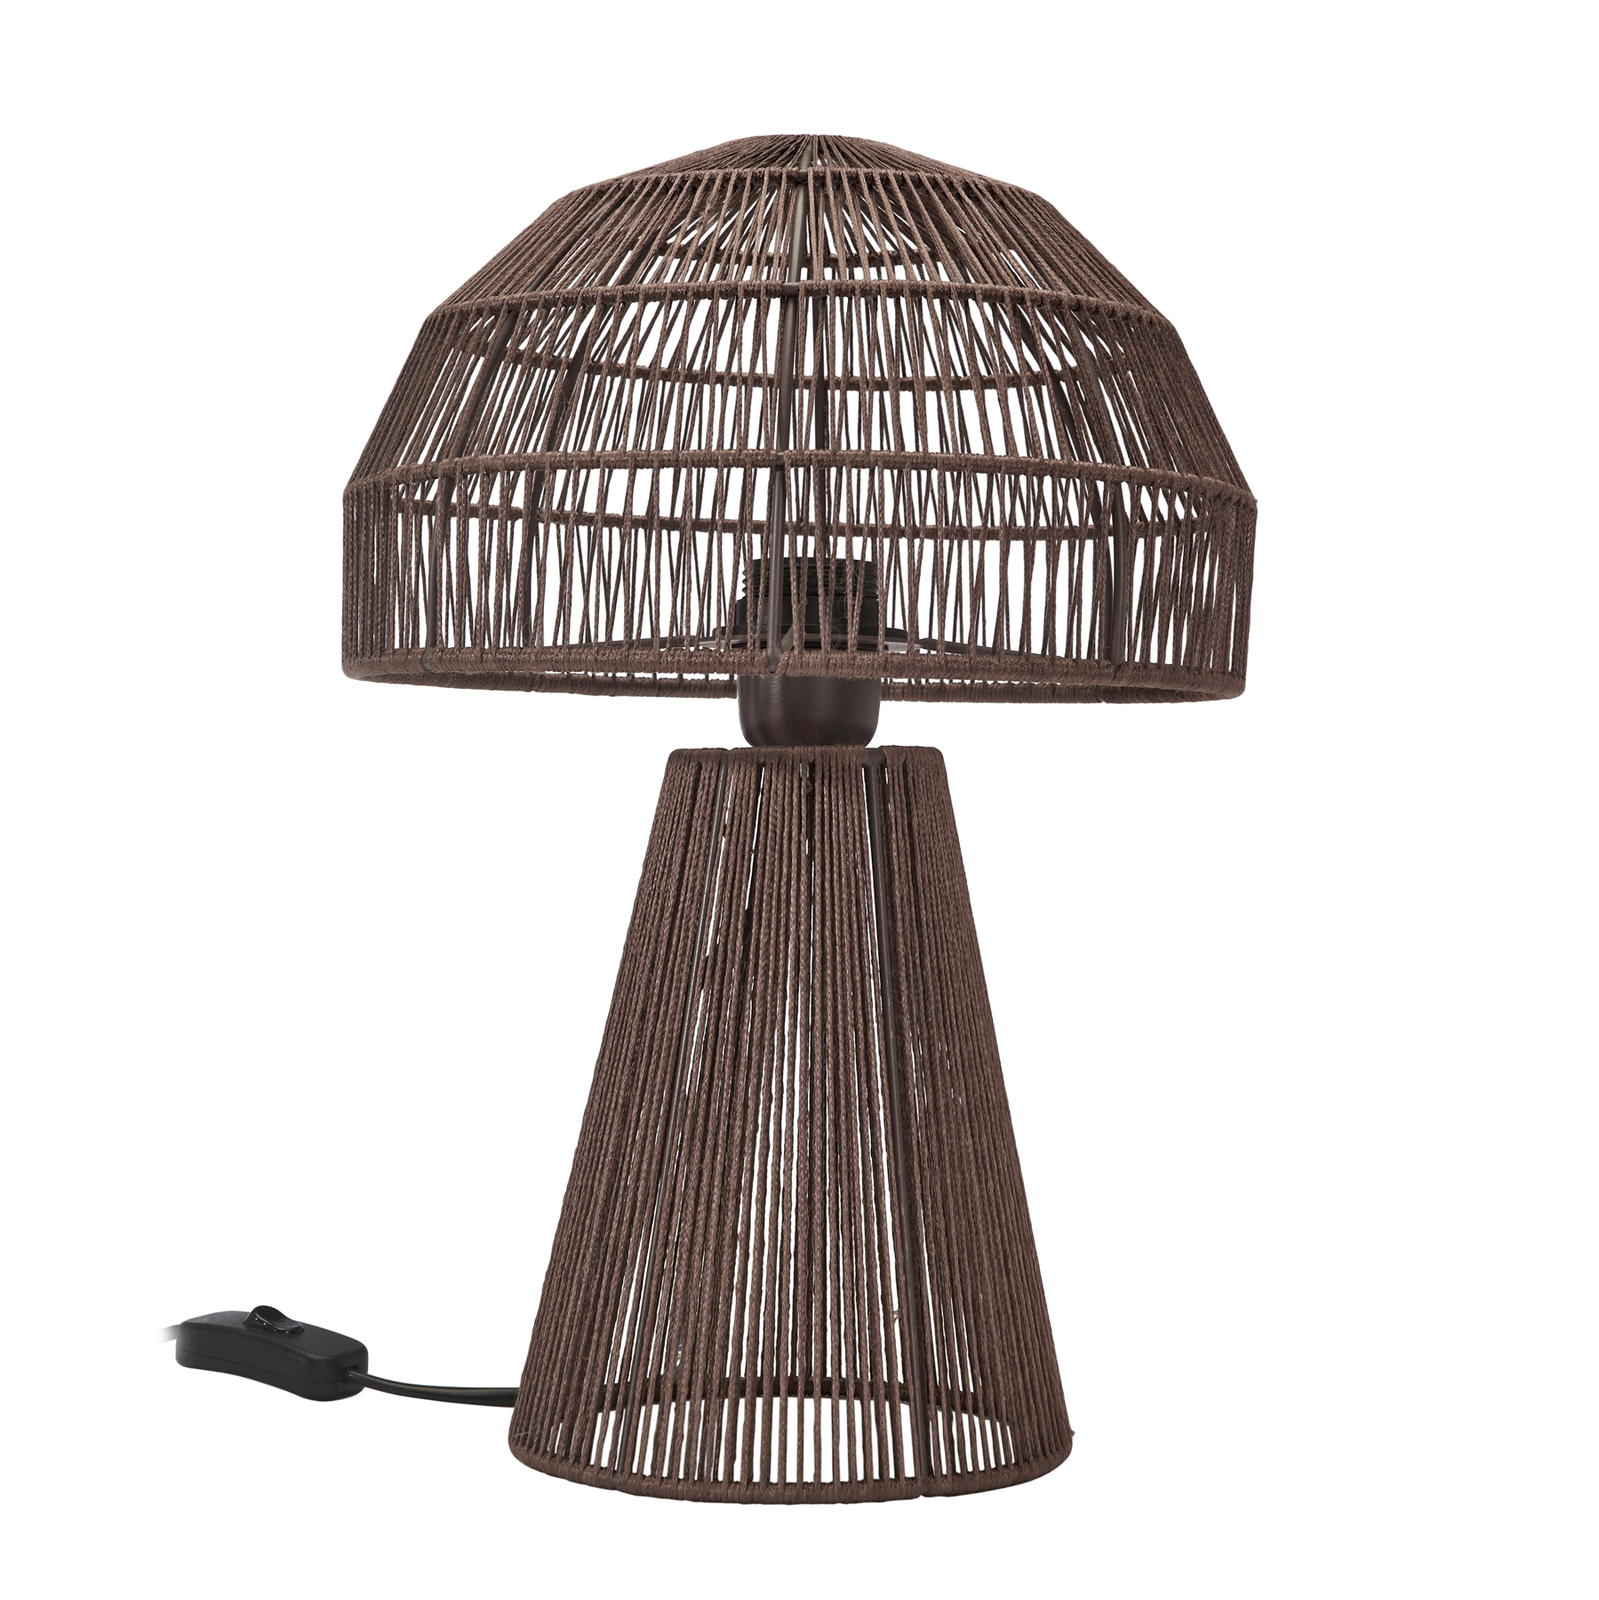 PR Home Porcini stolová lampa výška 37 cm hnedá